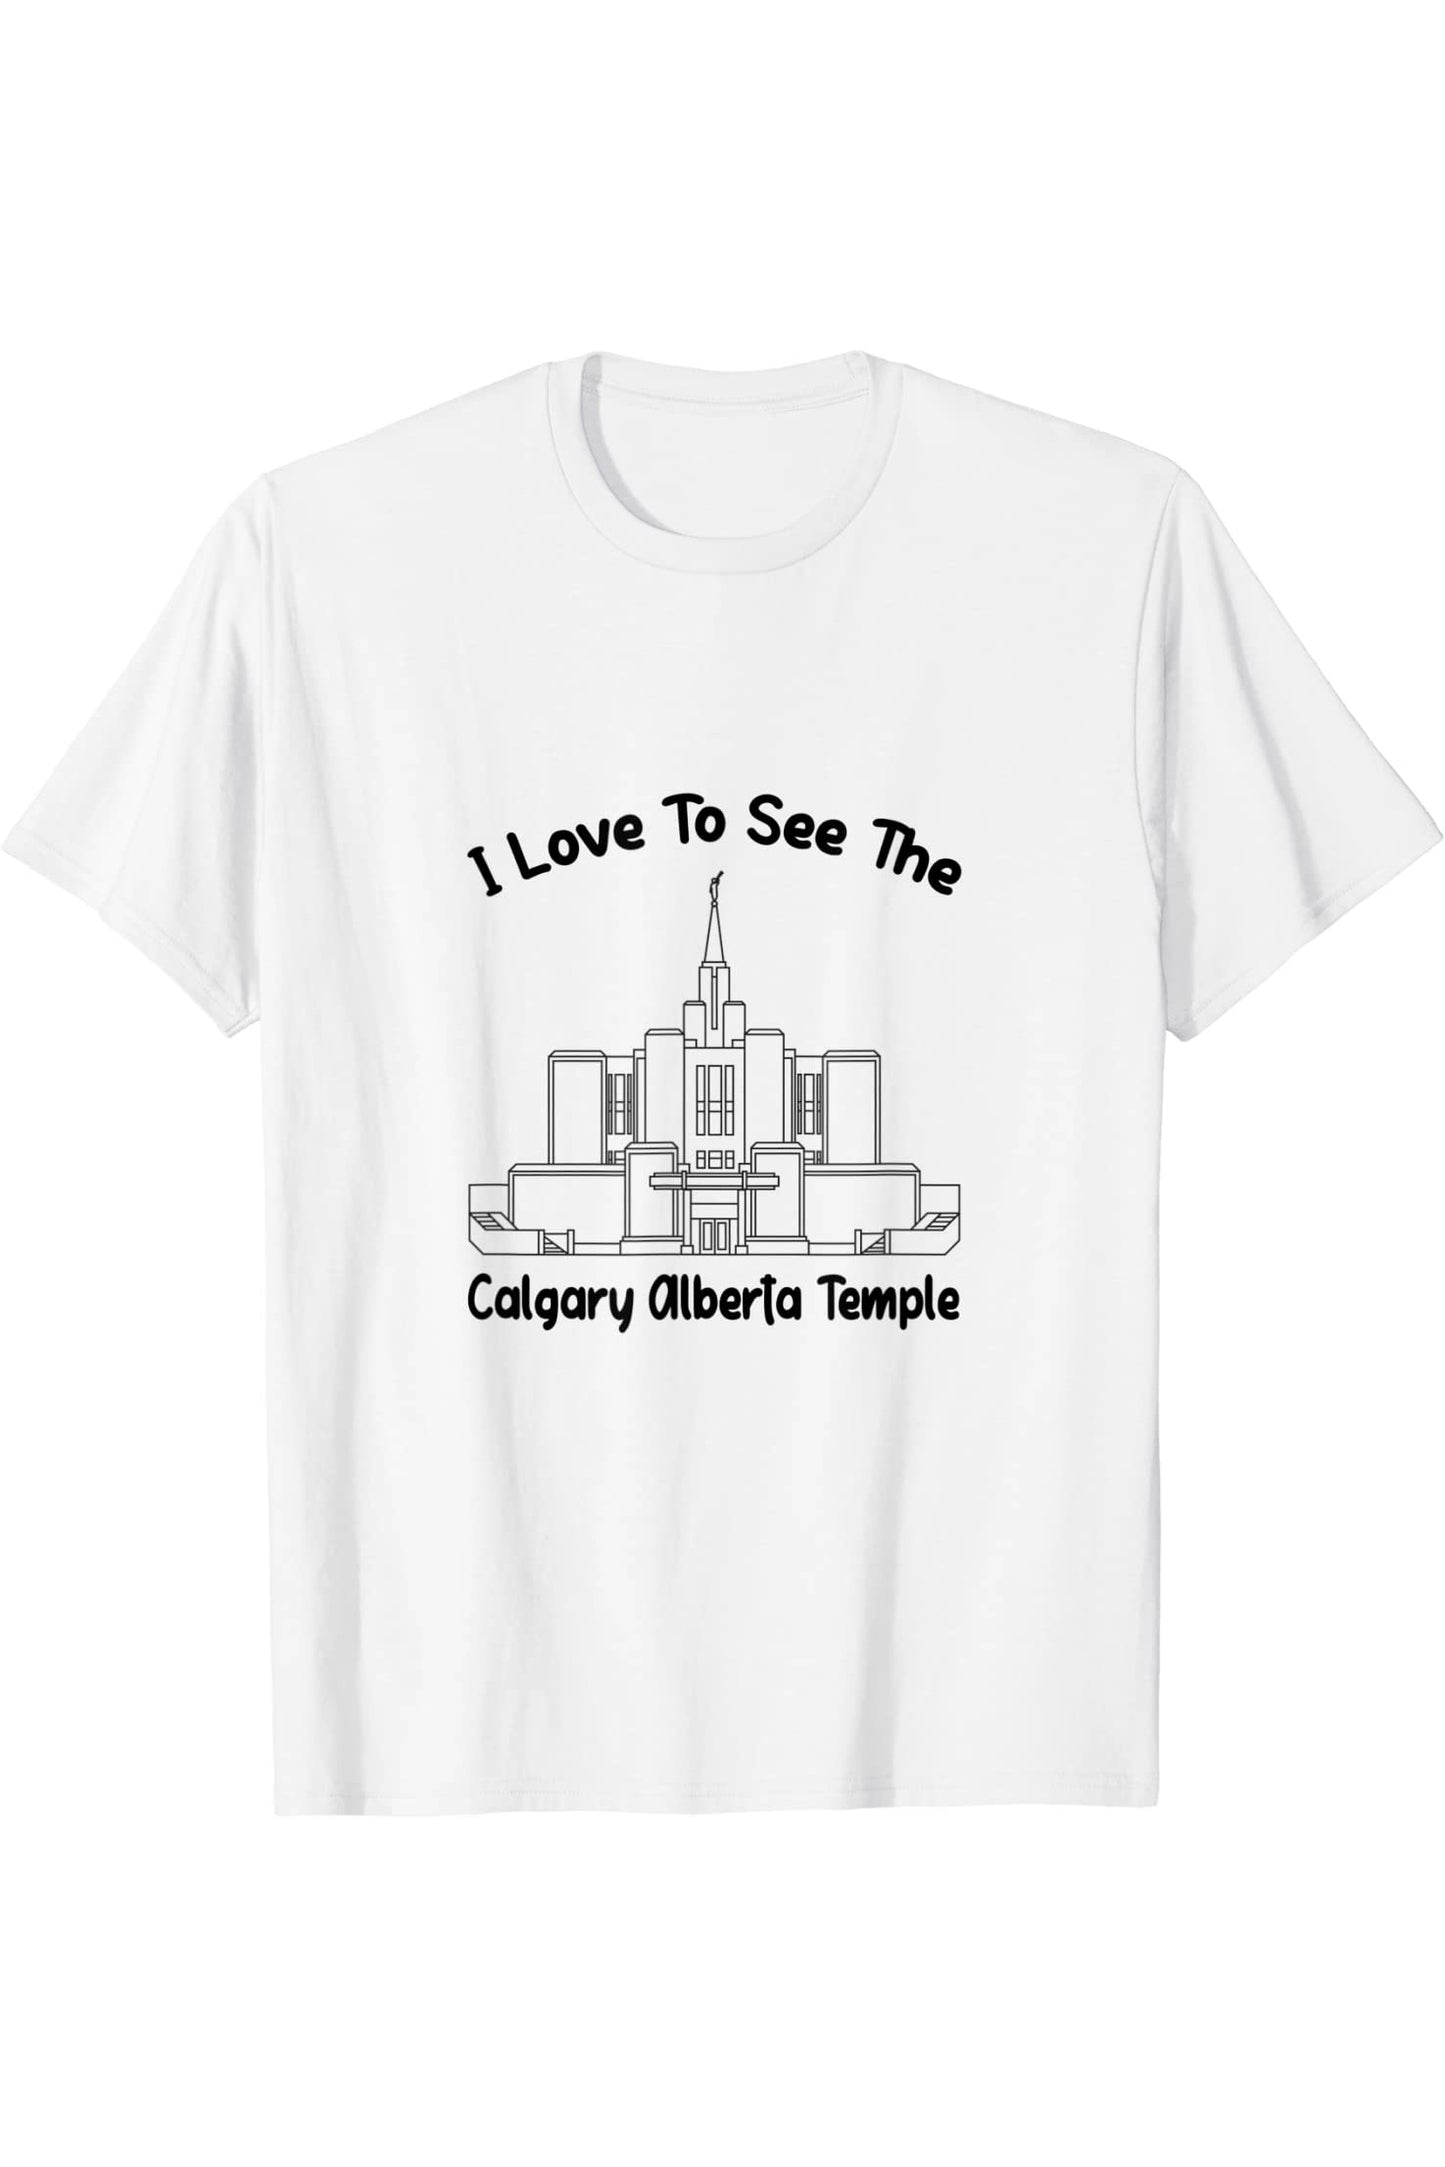 Calgary Alberta Temple T-Shirt - Primary Style (English) US